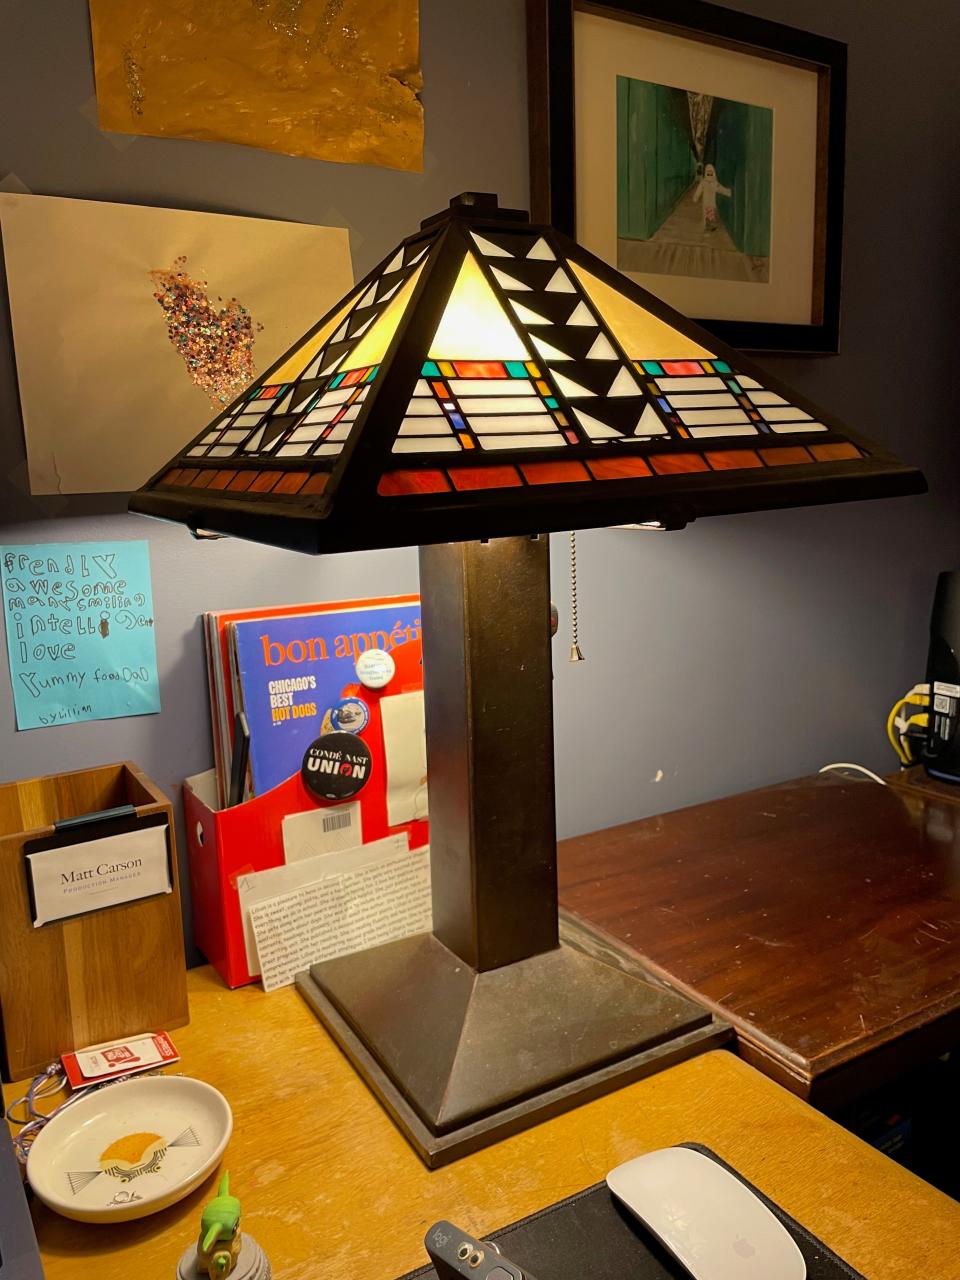 Matt Carson’s lamp from Patrick Swayze’s estate auction illuminates his desk.